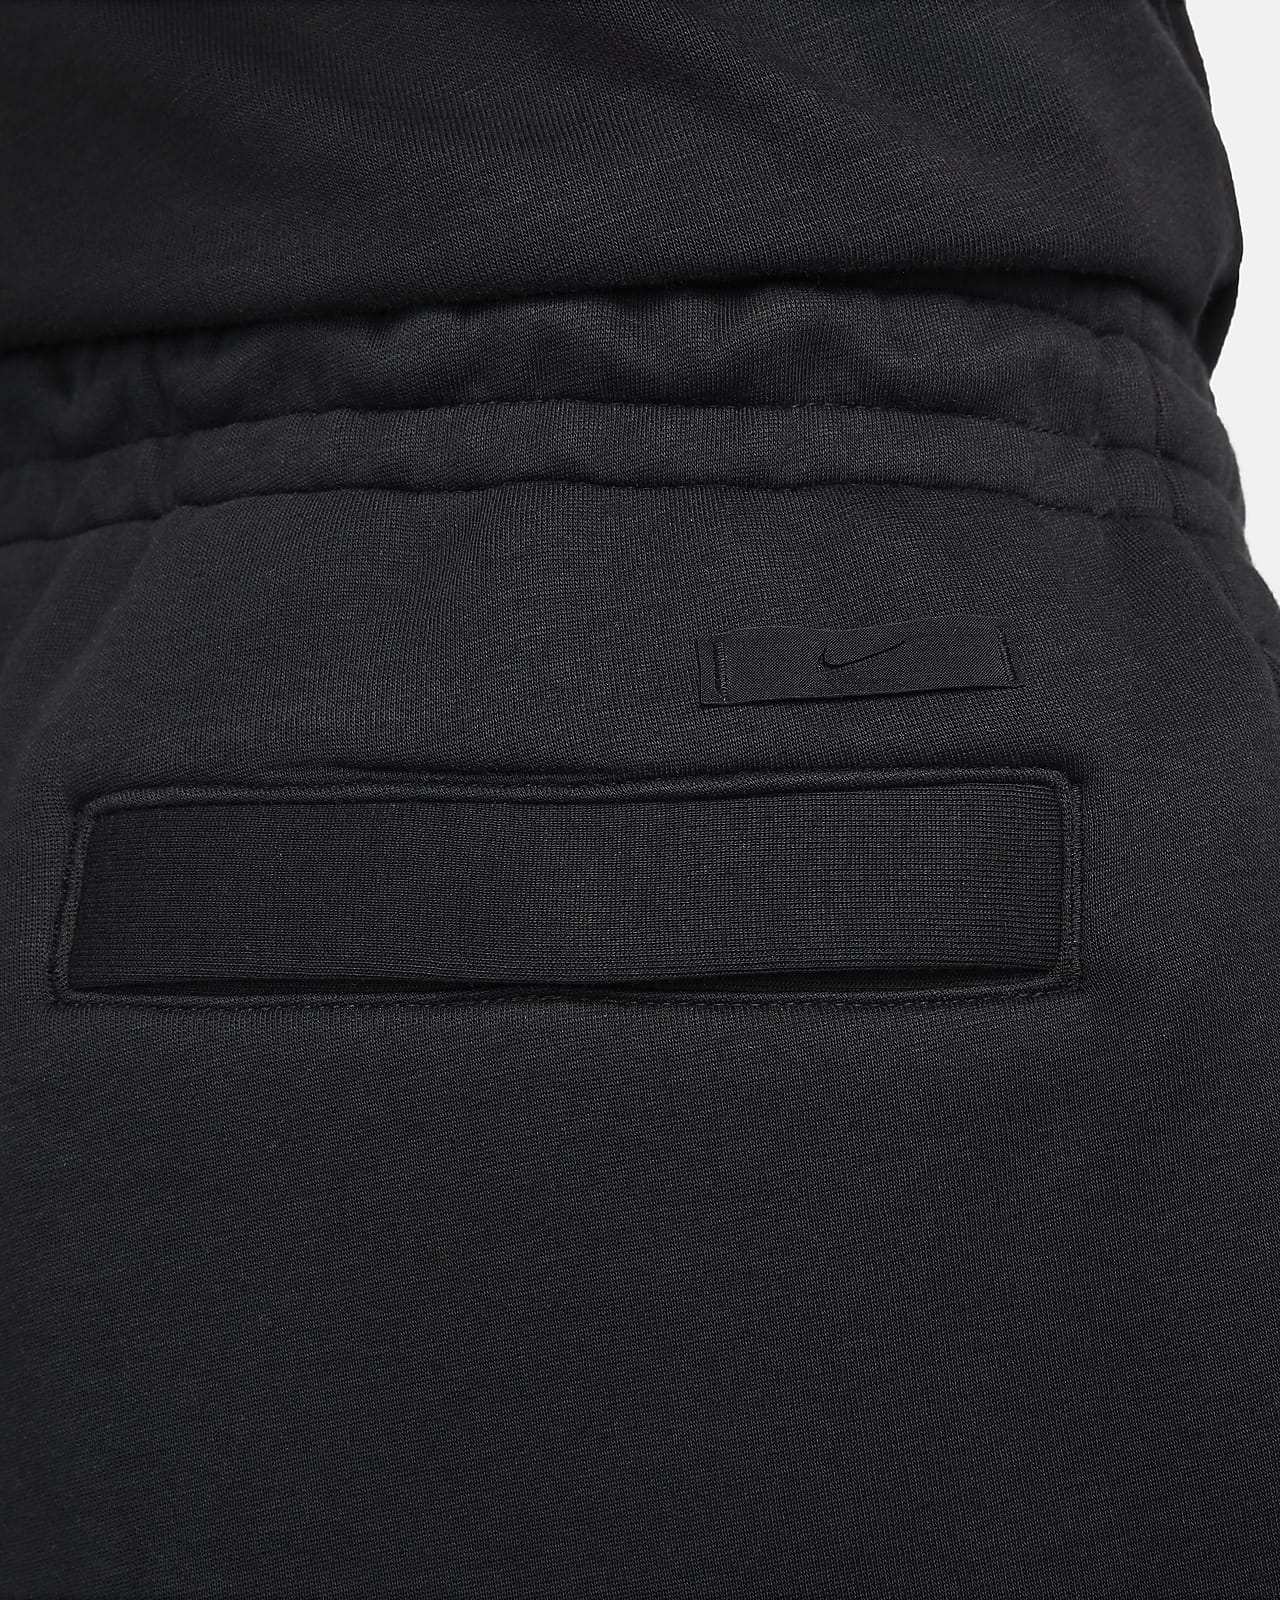 Nike Tech Fleece Reimagined Men's Fleece Pants.